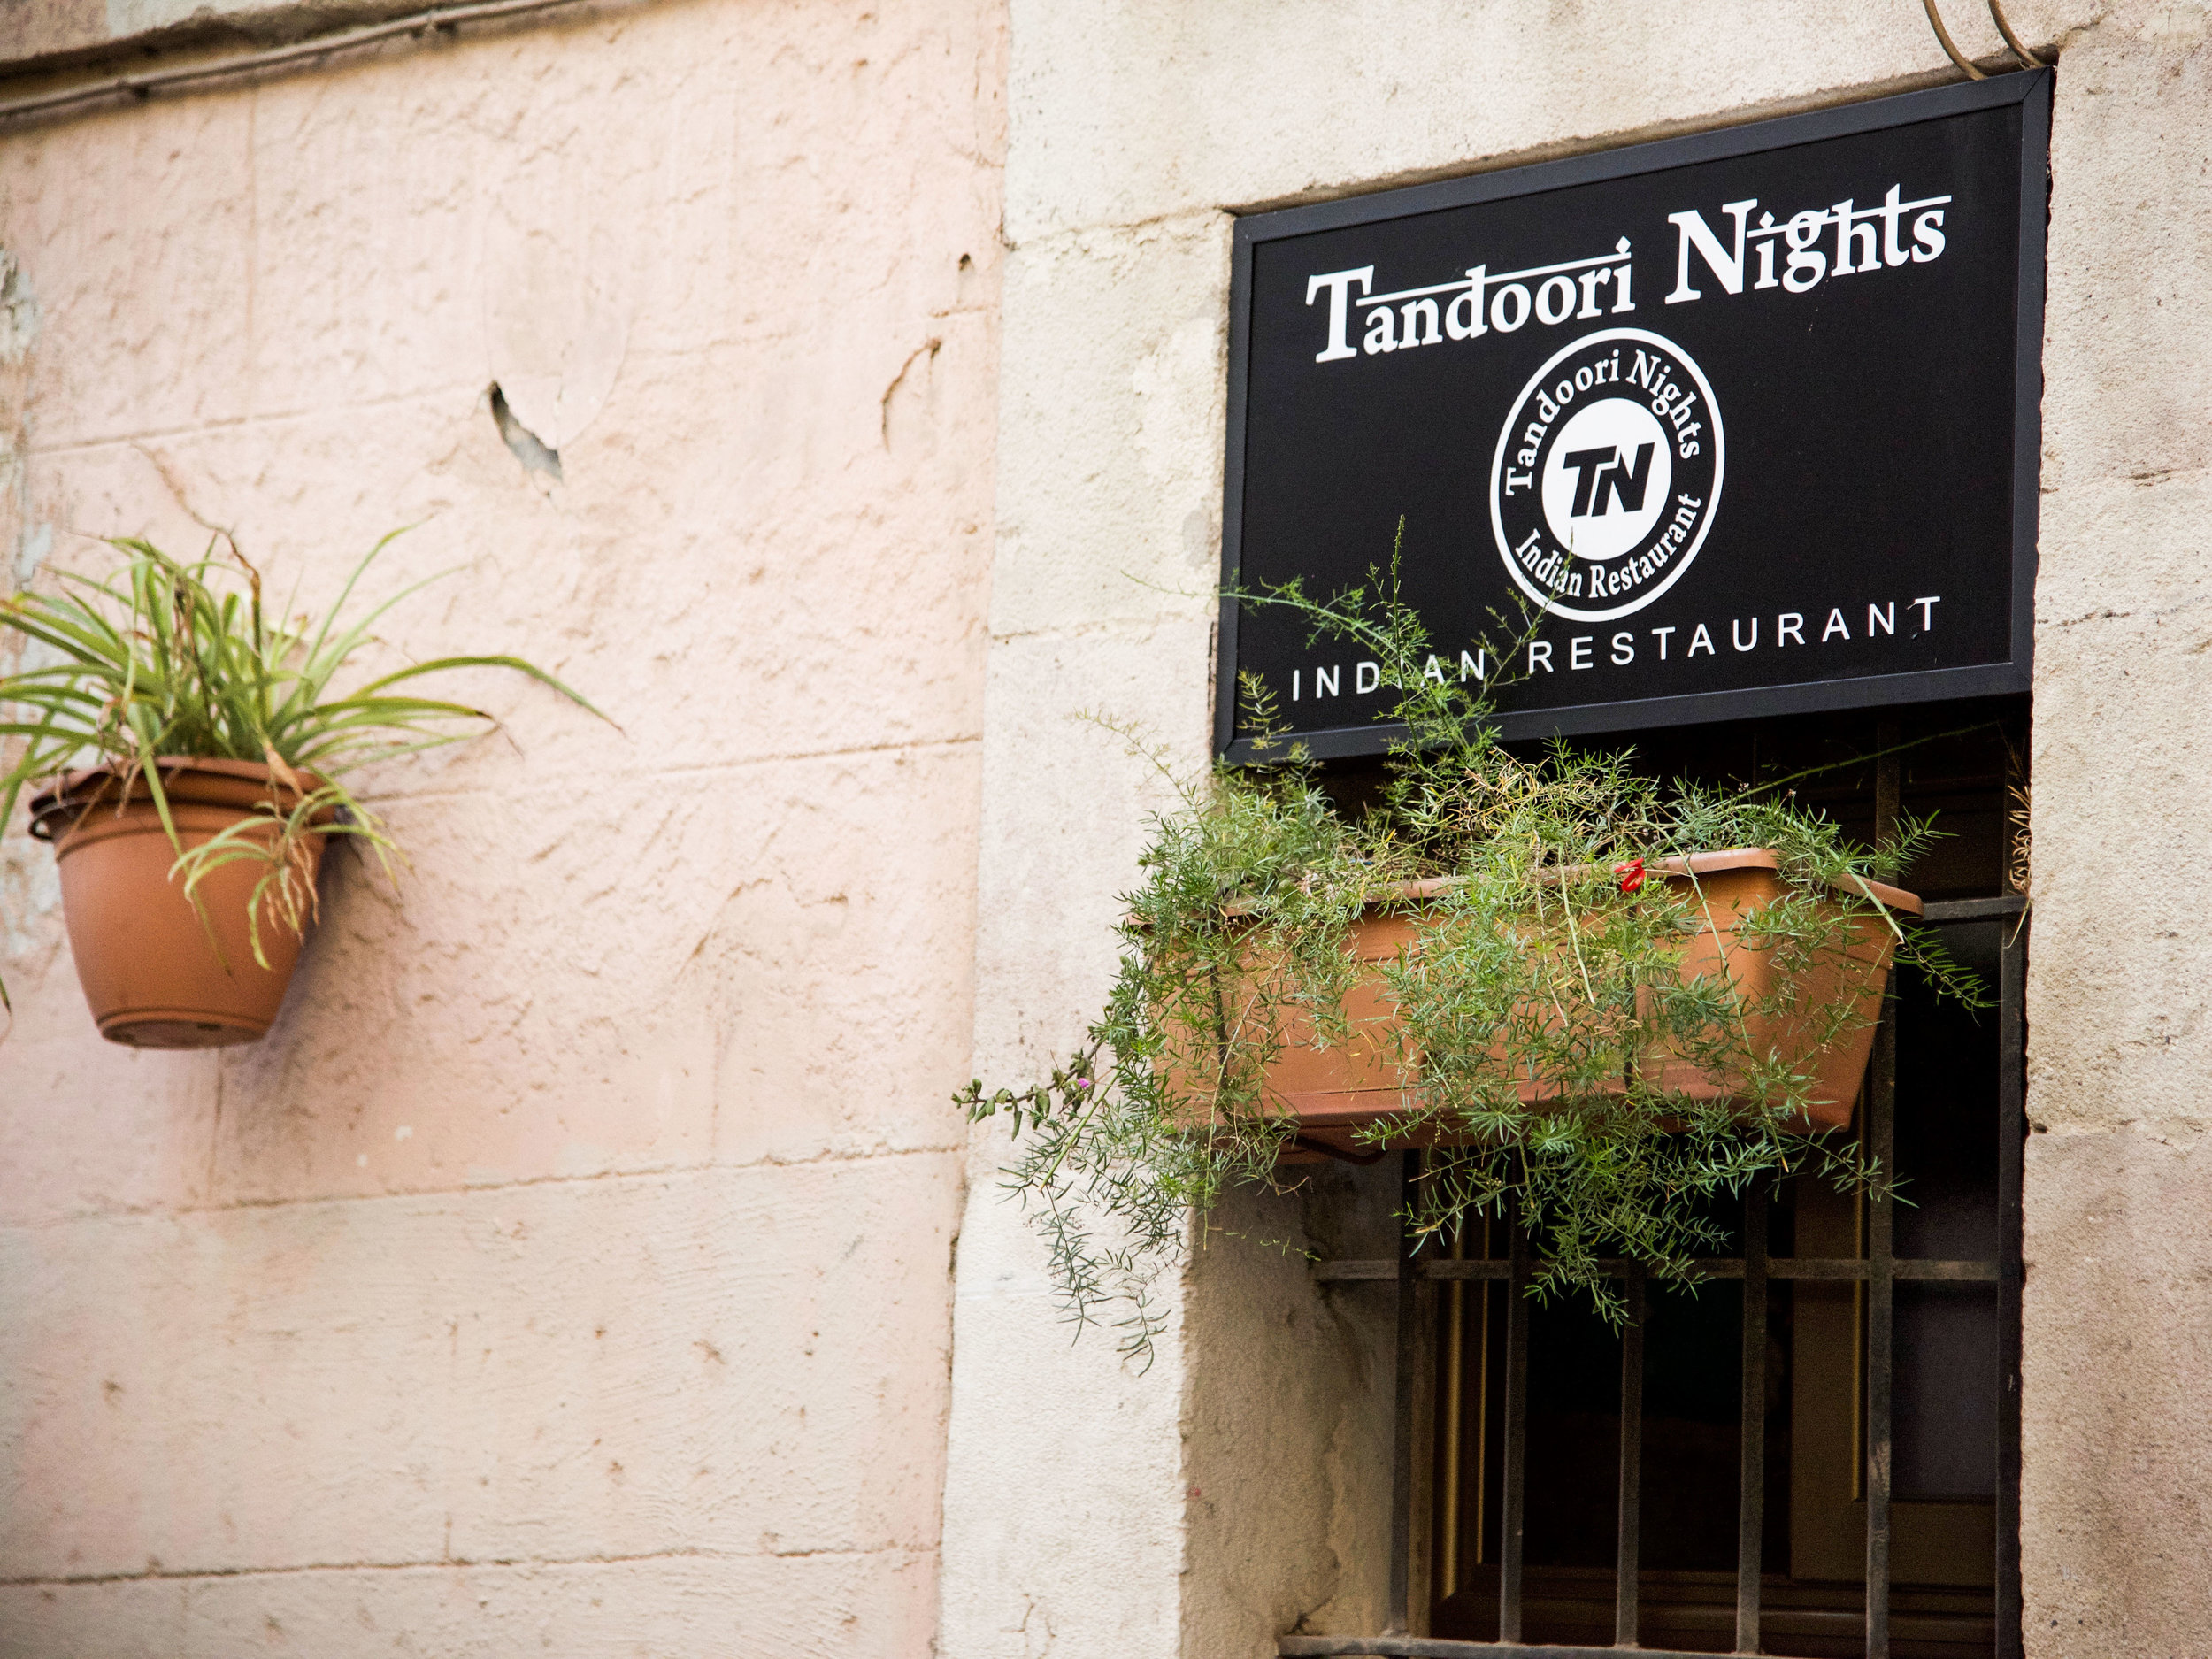 Tandoori-Nights-Barcelona-Spain-Indian-Restaurant-Window.jpg